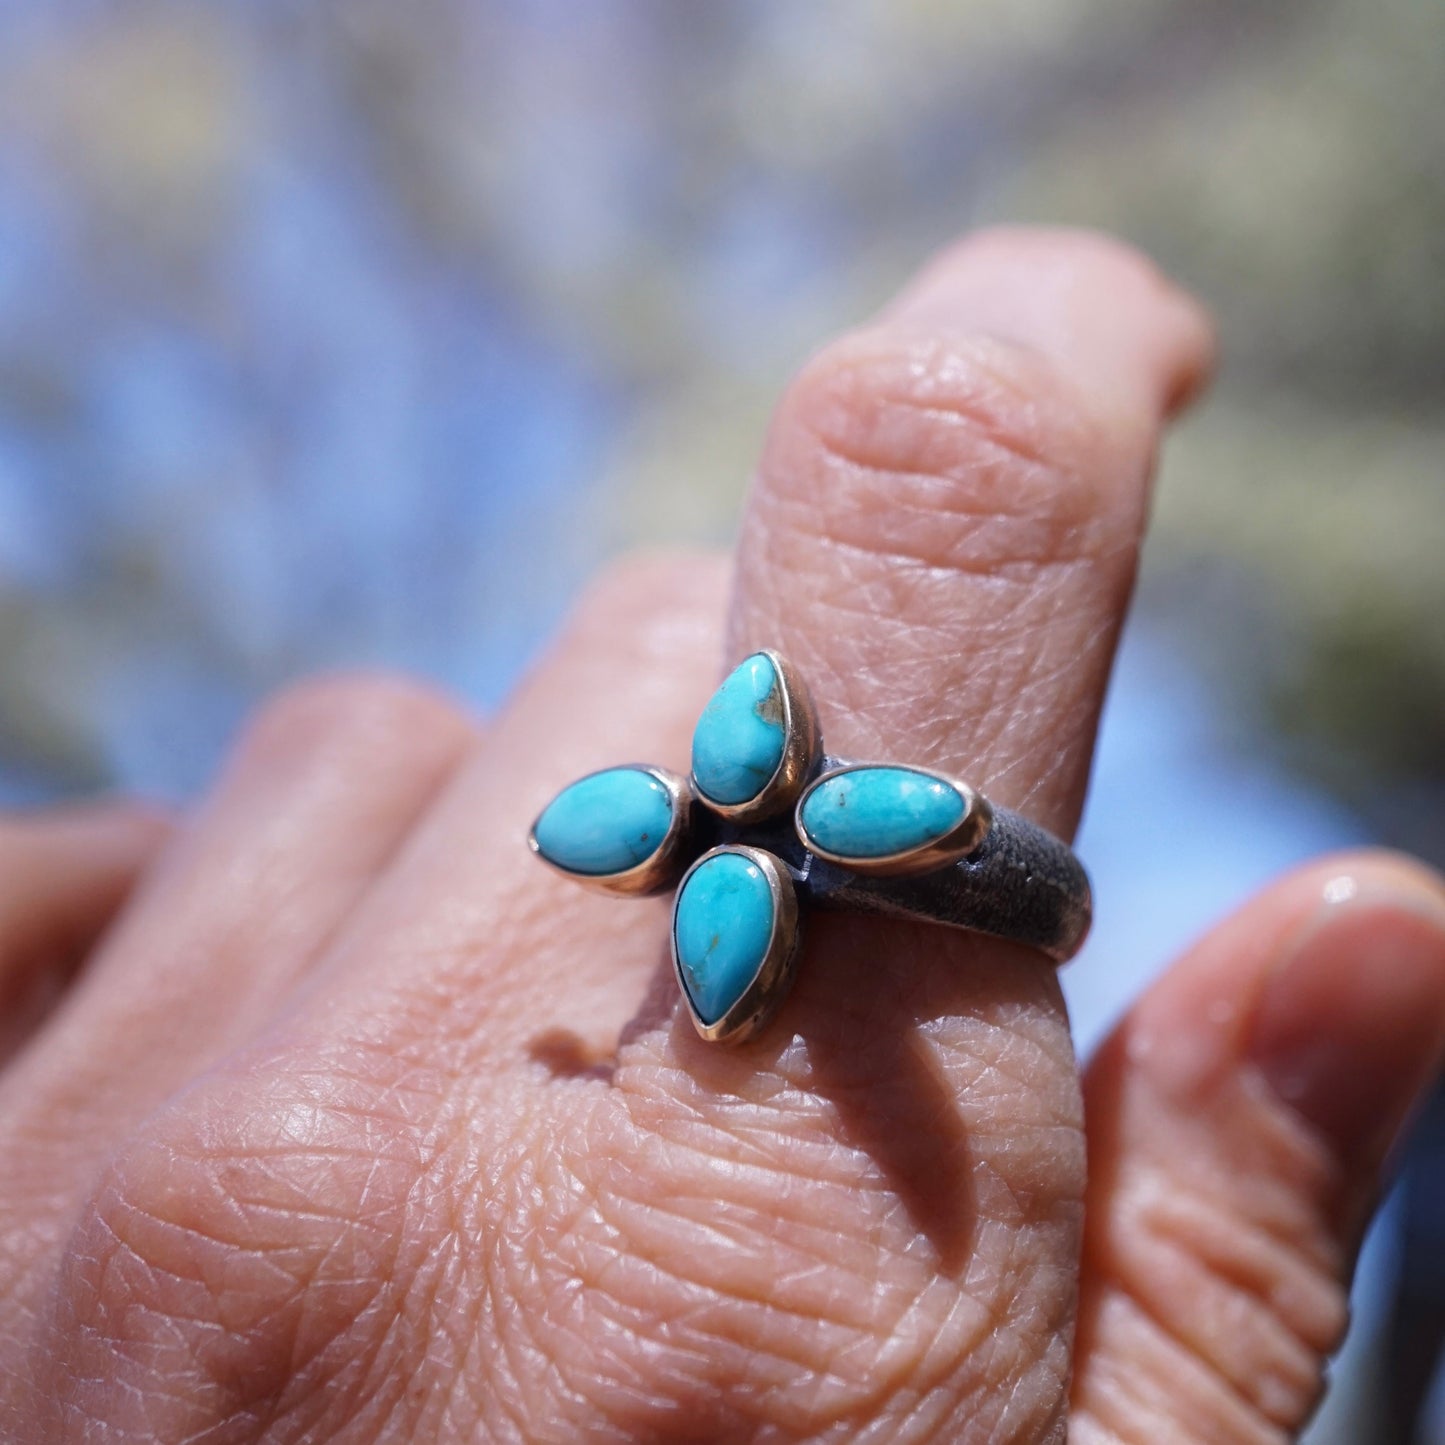 sandcast flower burst ring with blue ridge turquoise and 14k GOLD bezels - size 7 - Lumenrose